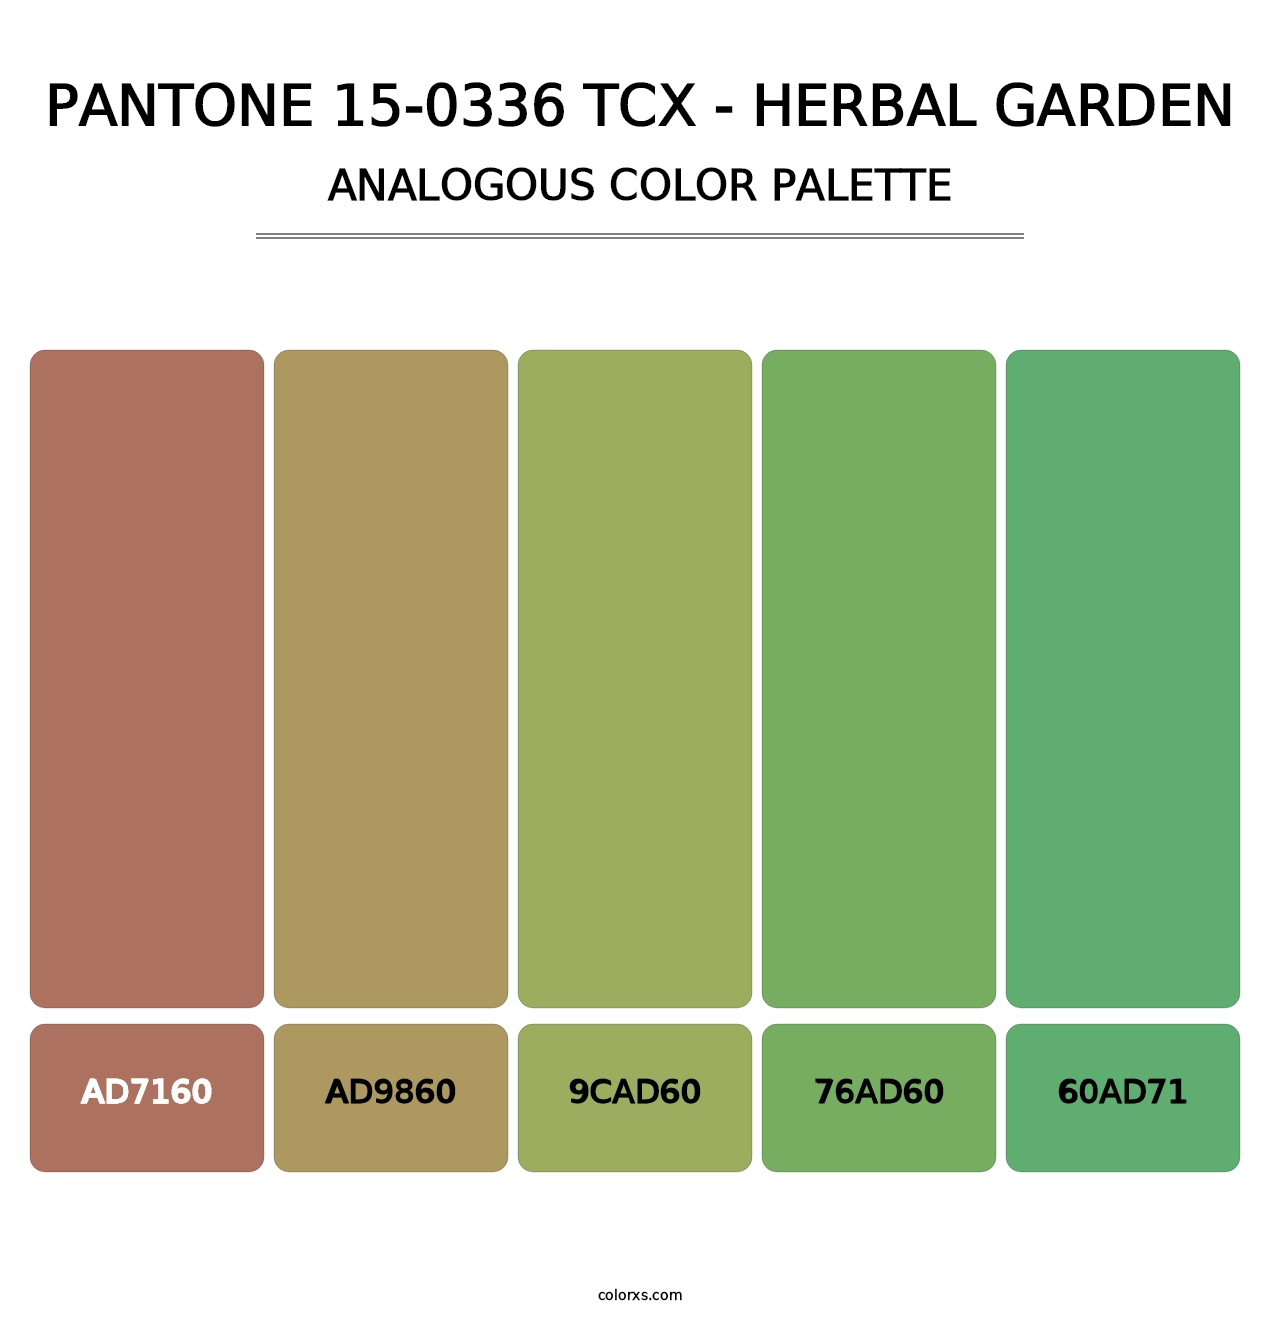 PANTONE 15-0336 TCX - Herbal Garden - Analogous Color Palette